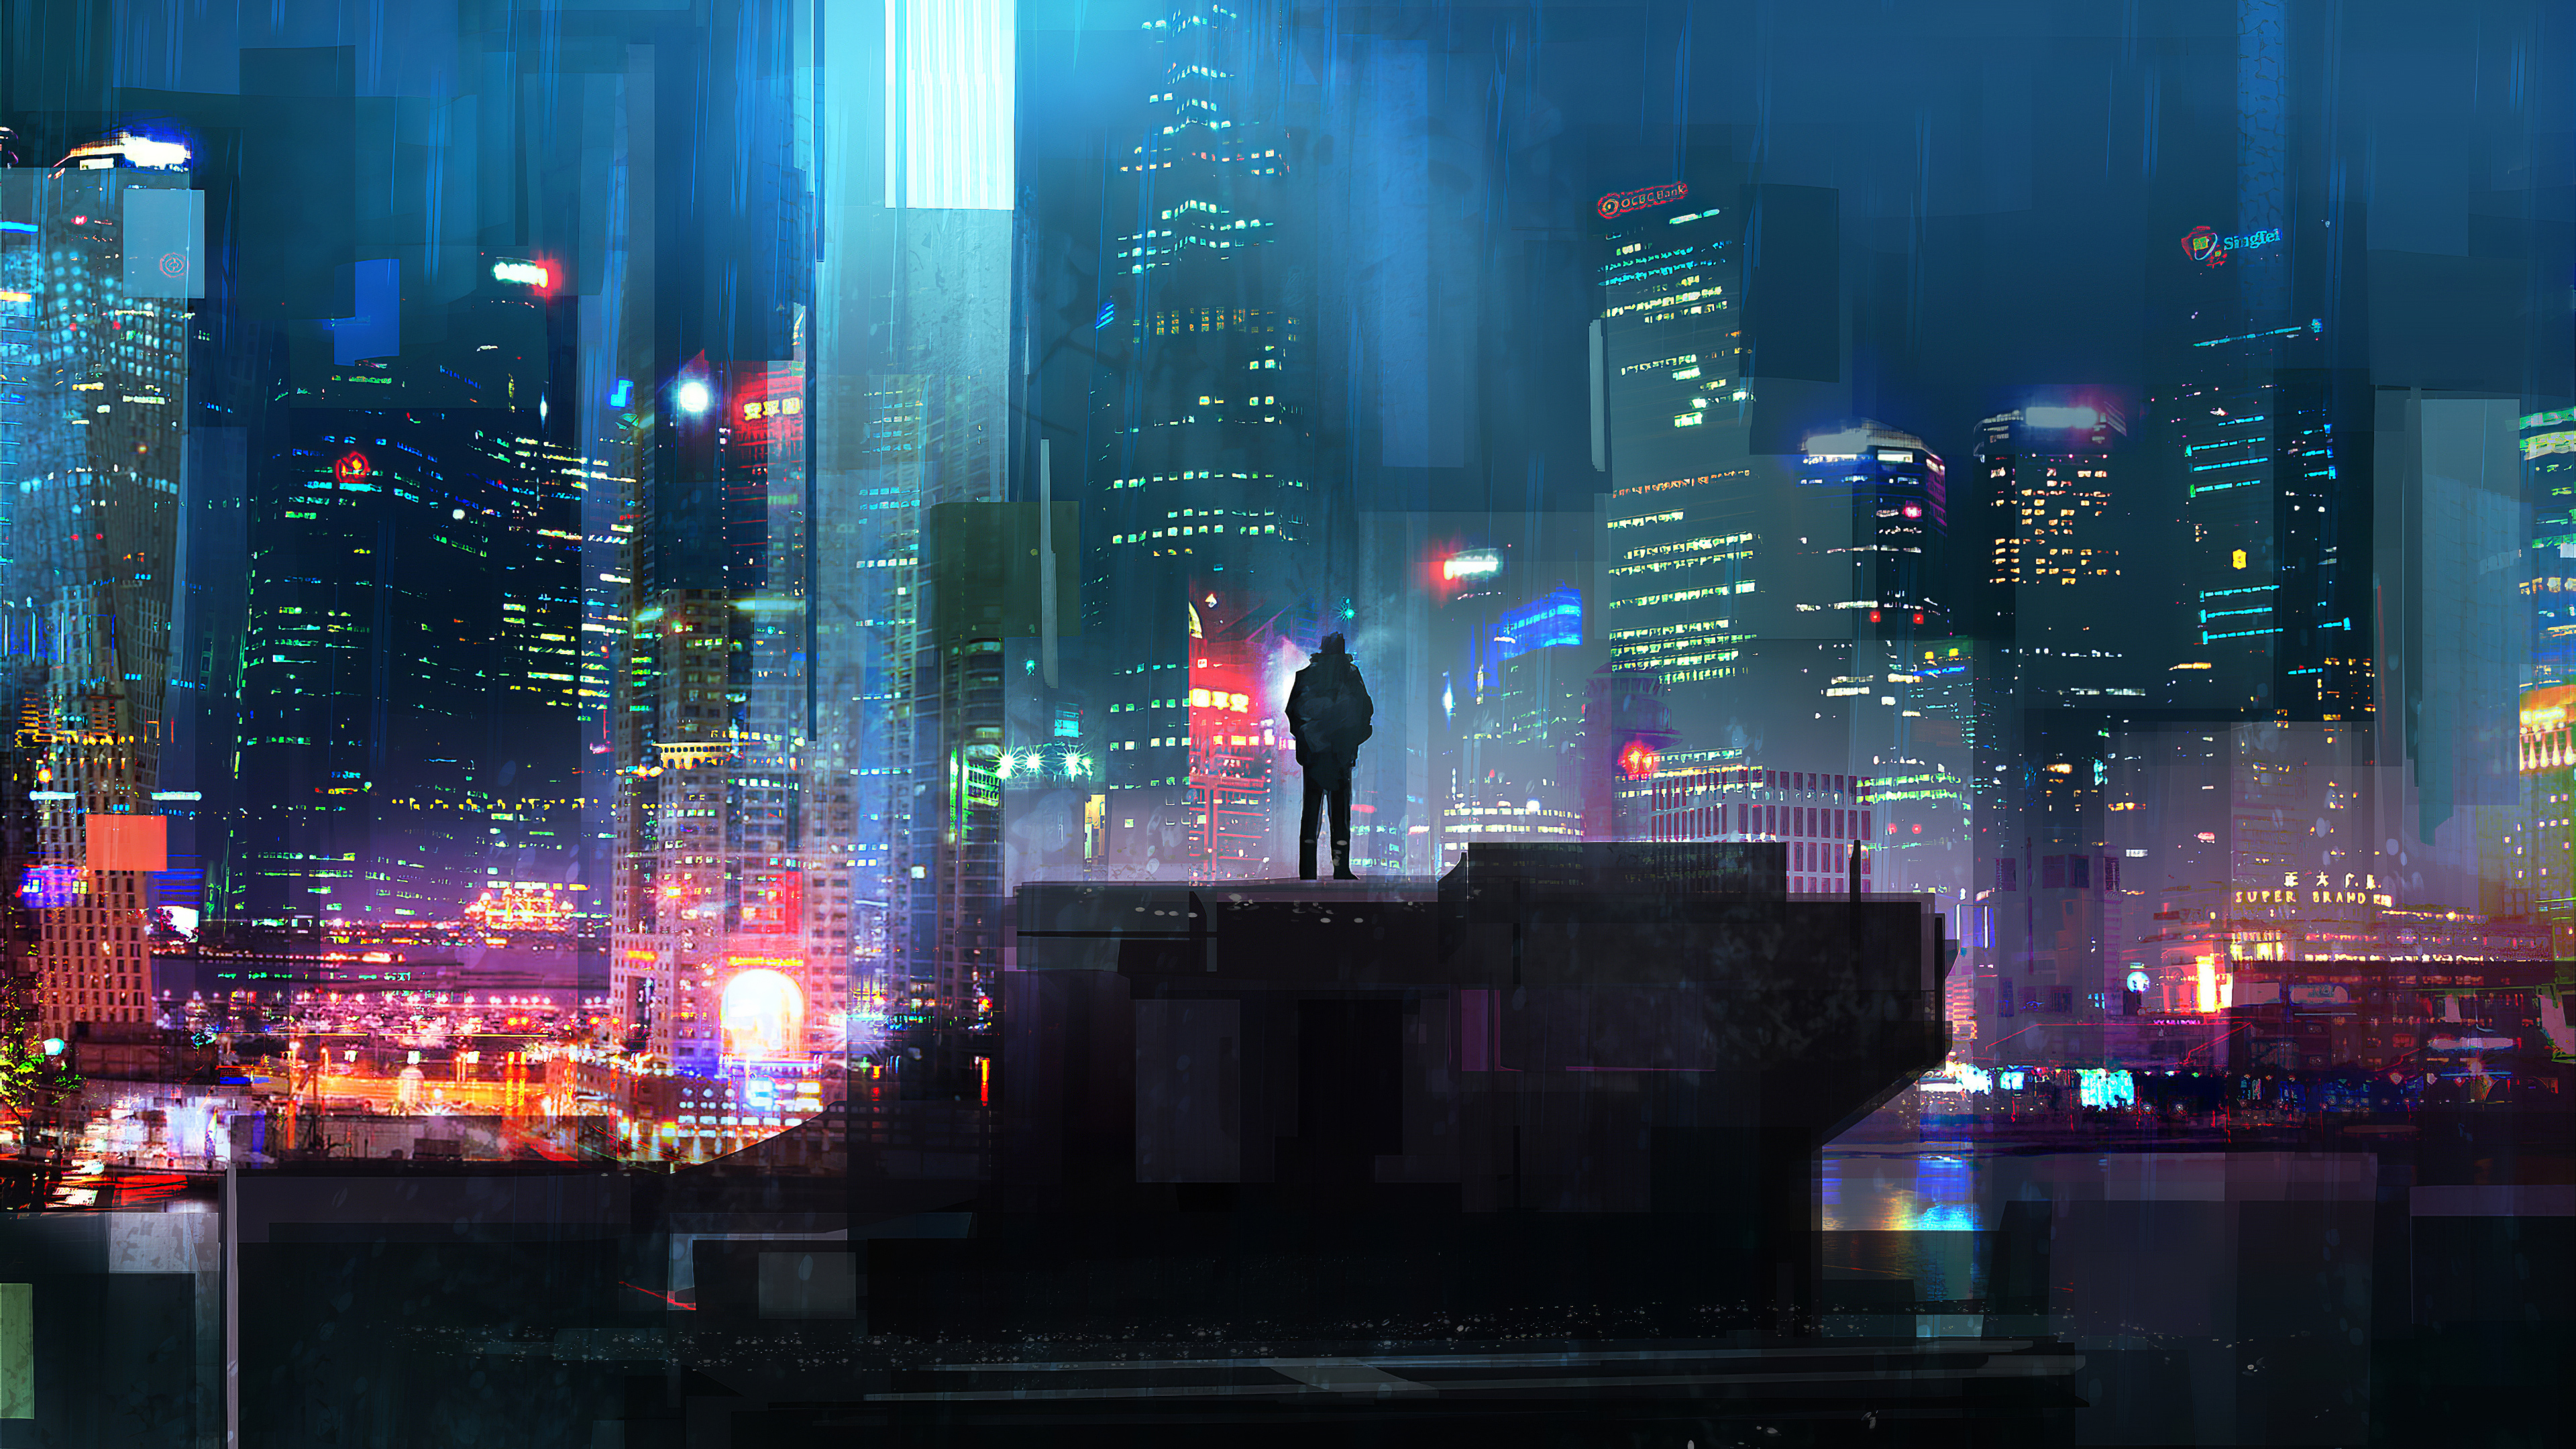 Night City (Cyberpunk 2077) wallpapers for desktop, download free